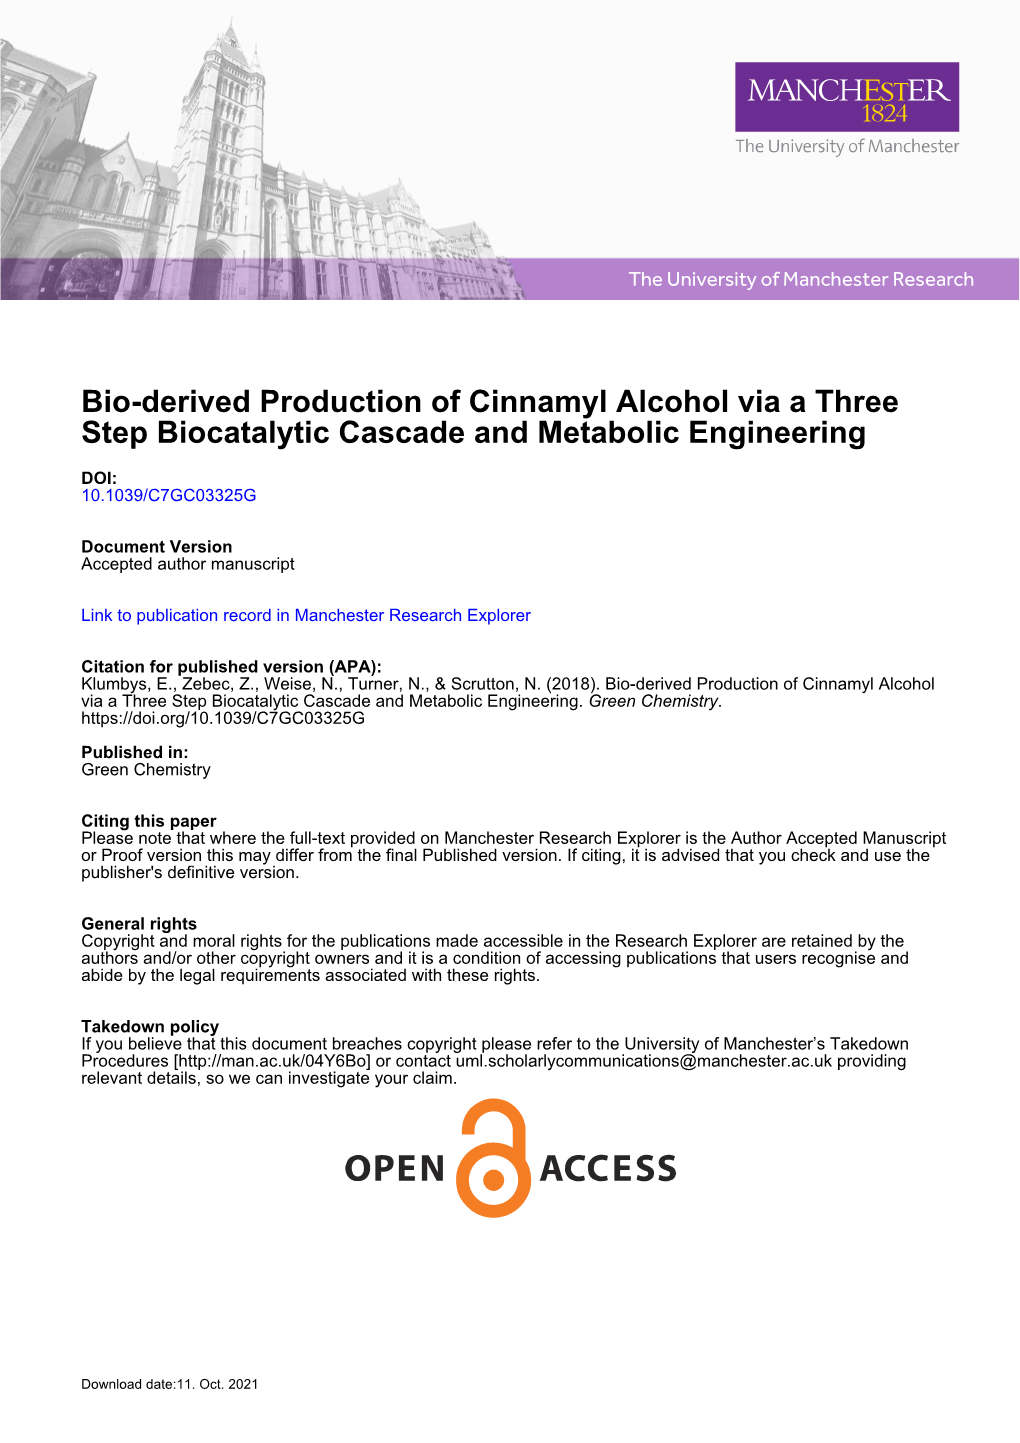 Bio-Derived Production of Cinnamyl Alcohol Via a Three Step Biocatalytic Cascade and Metabolic Engineering